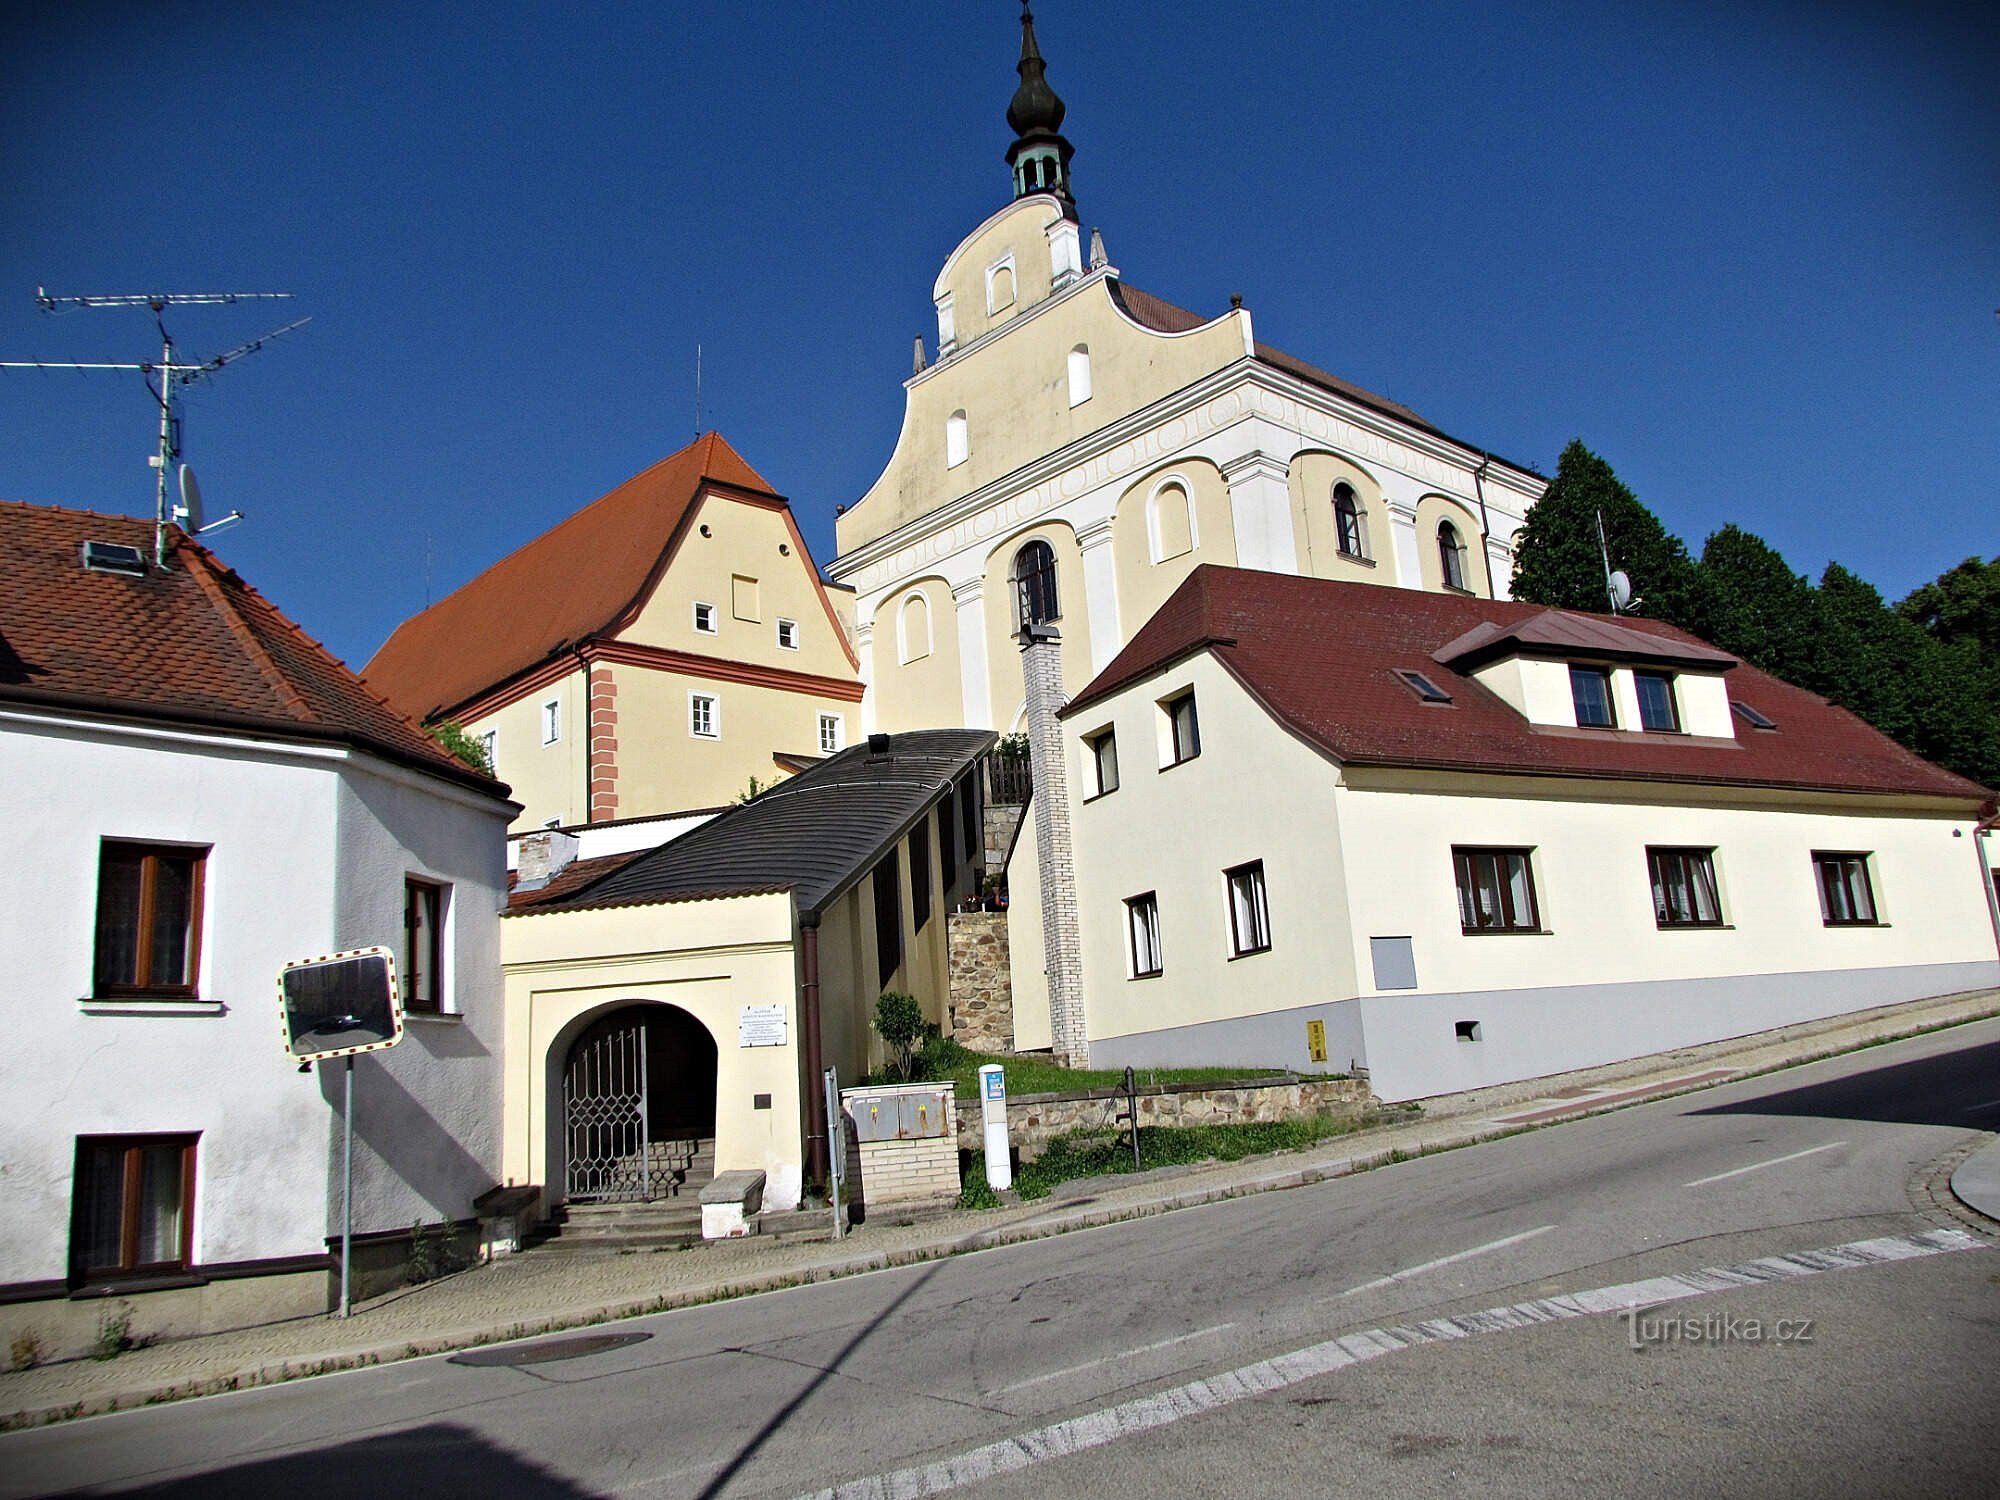 biserica din strada Jemnická